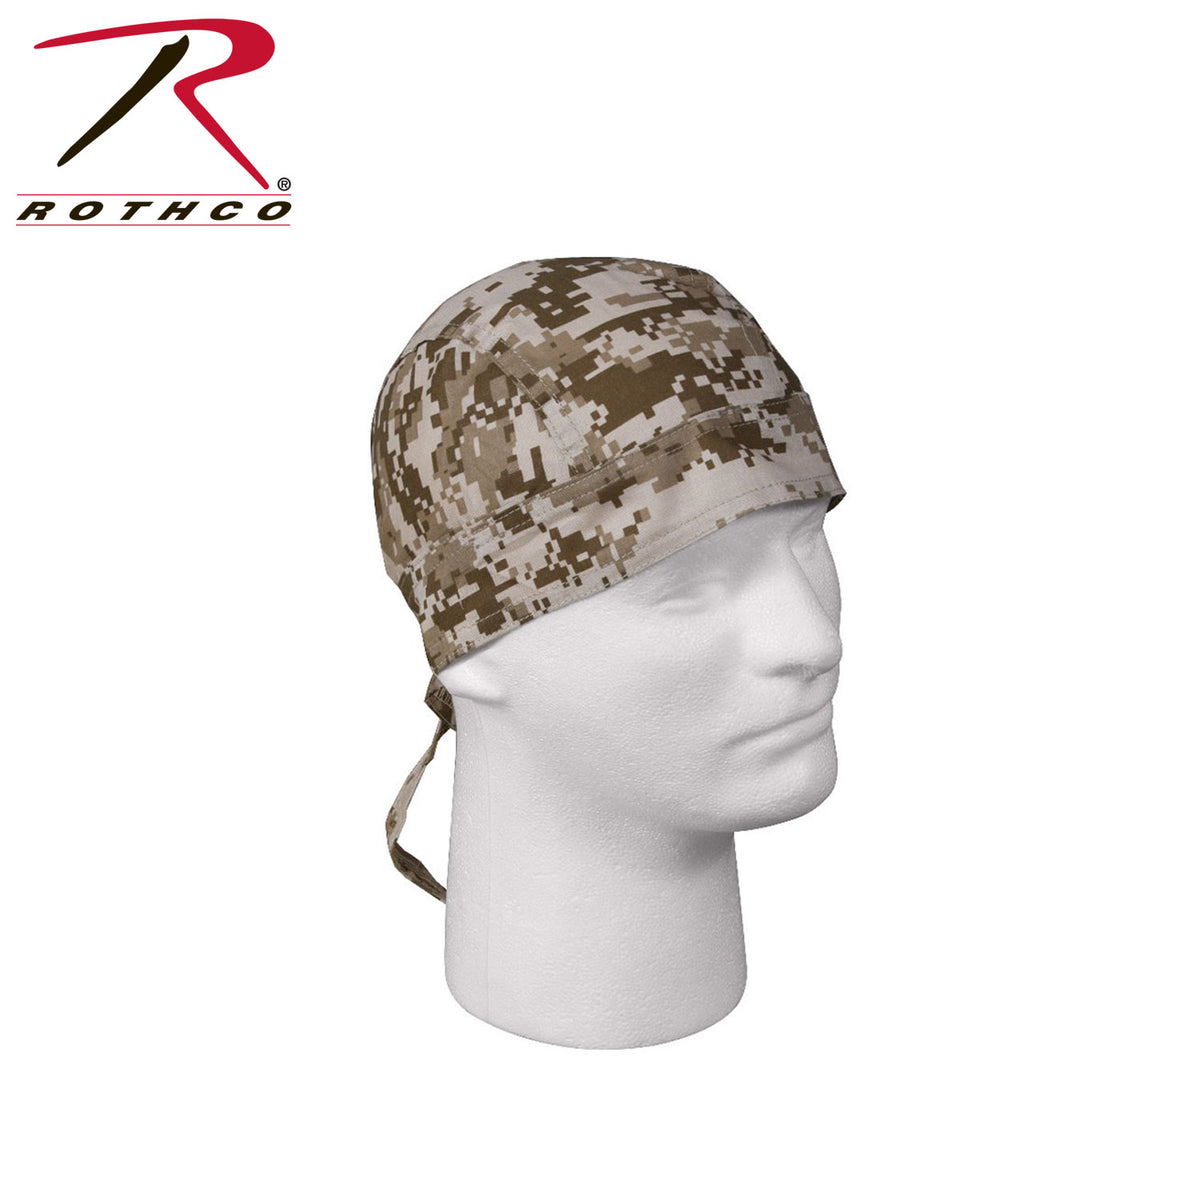 Rothco Digital Camo Headwrap - CLOSEOUT!